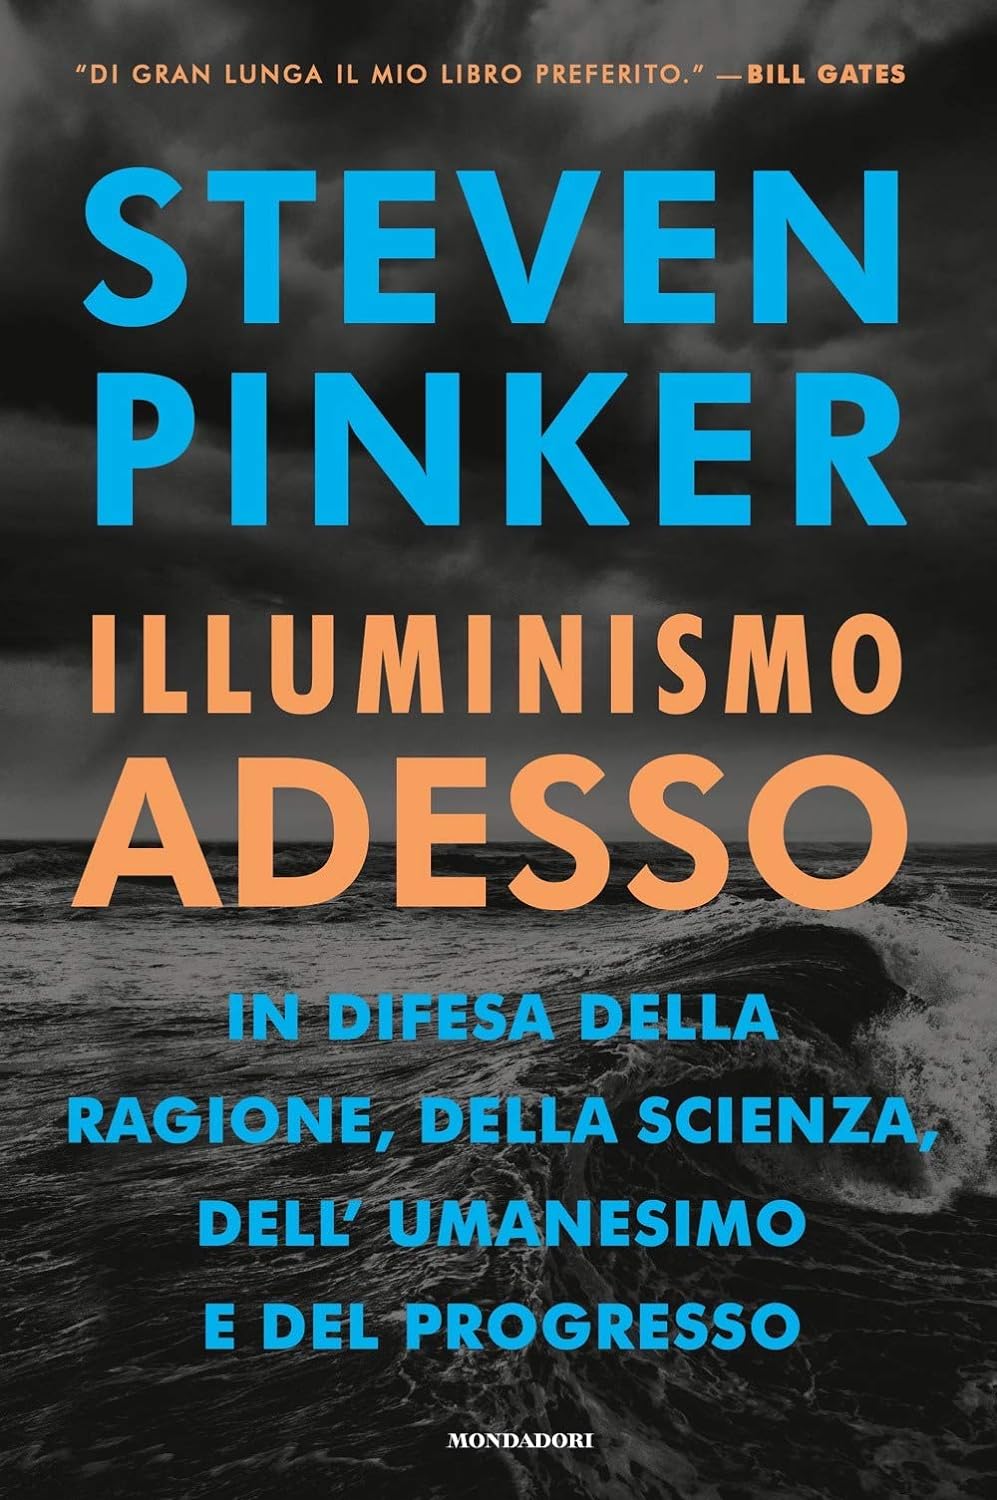 Illuminismo adesso (Paperback, Italiano language, 2018, Mondadori)